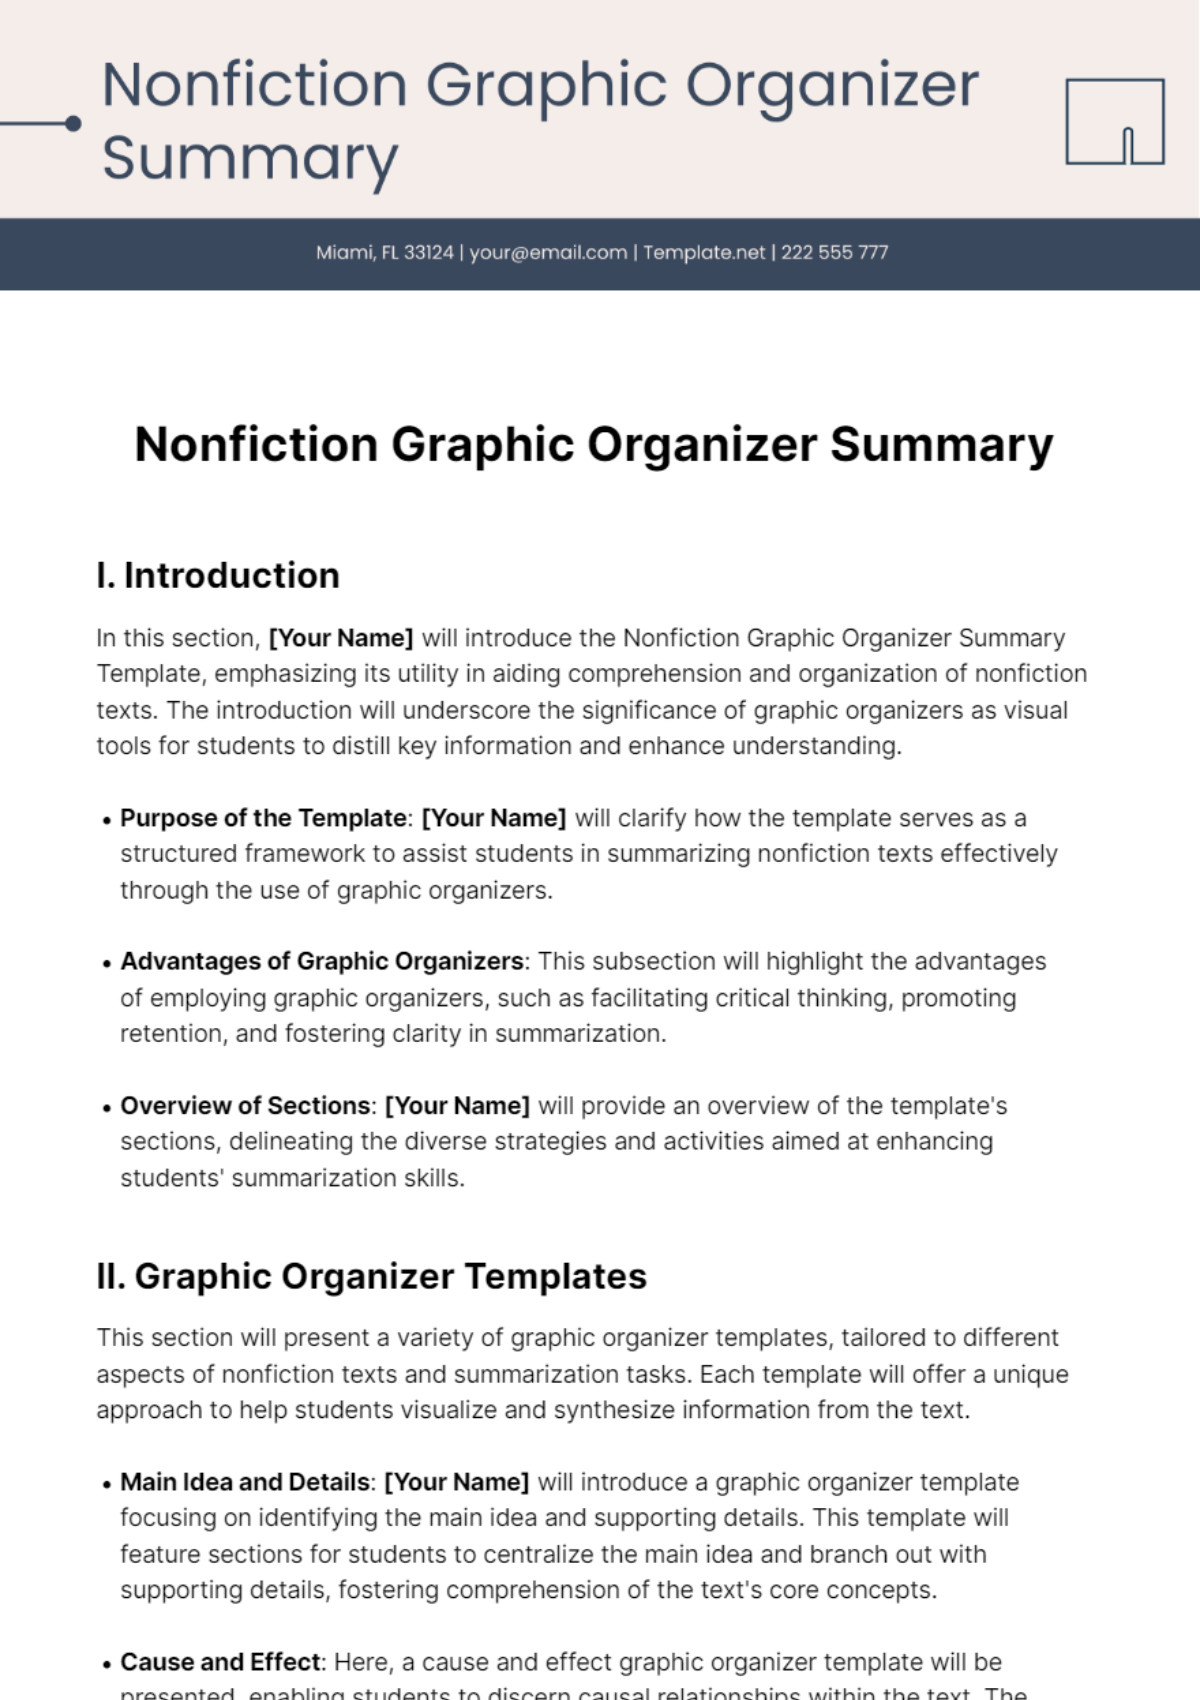 Nonfiction Graphic Organizer Summary Template